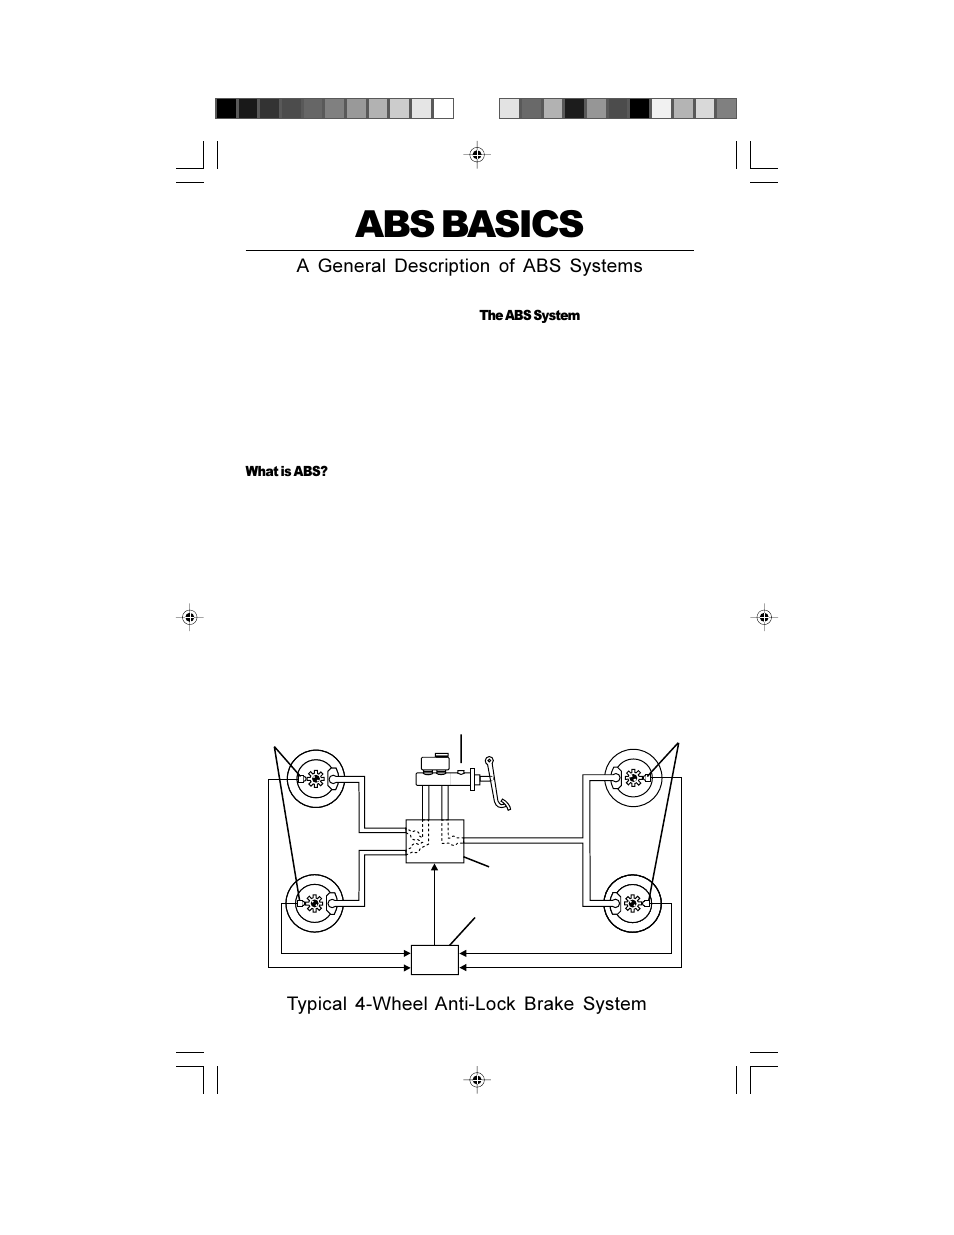 Abs basics, Typical 4-wheel anti-lock brake system, A general